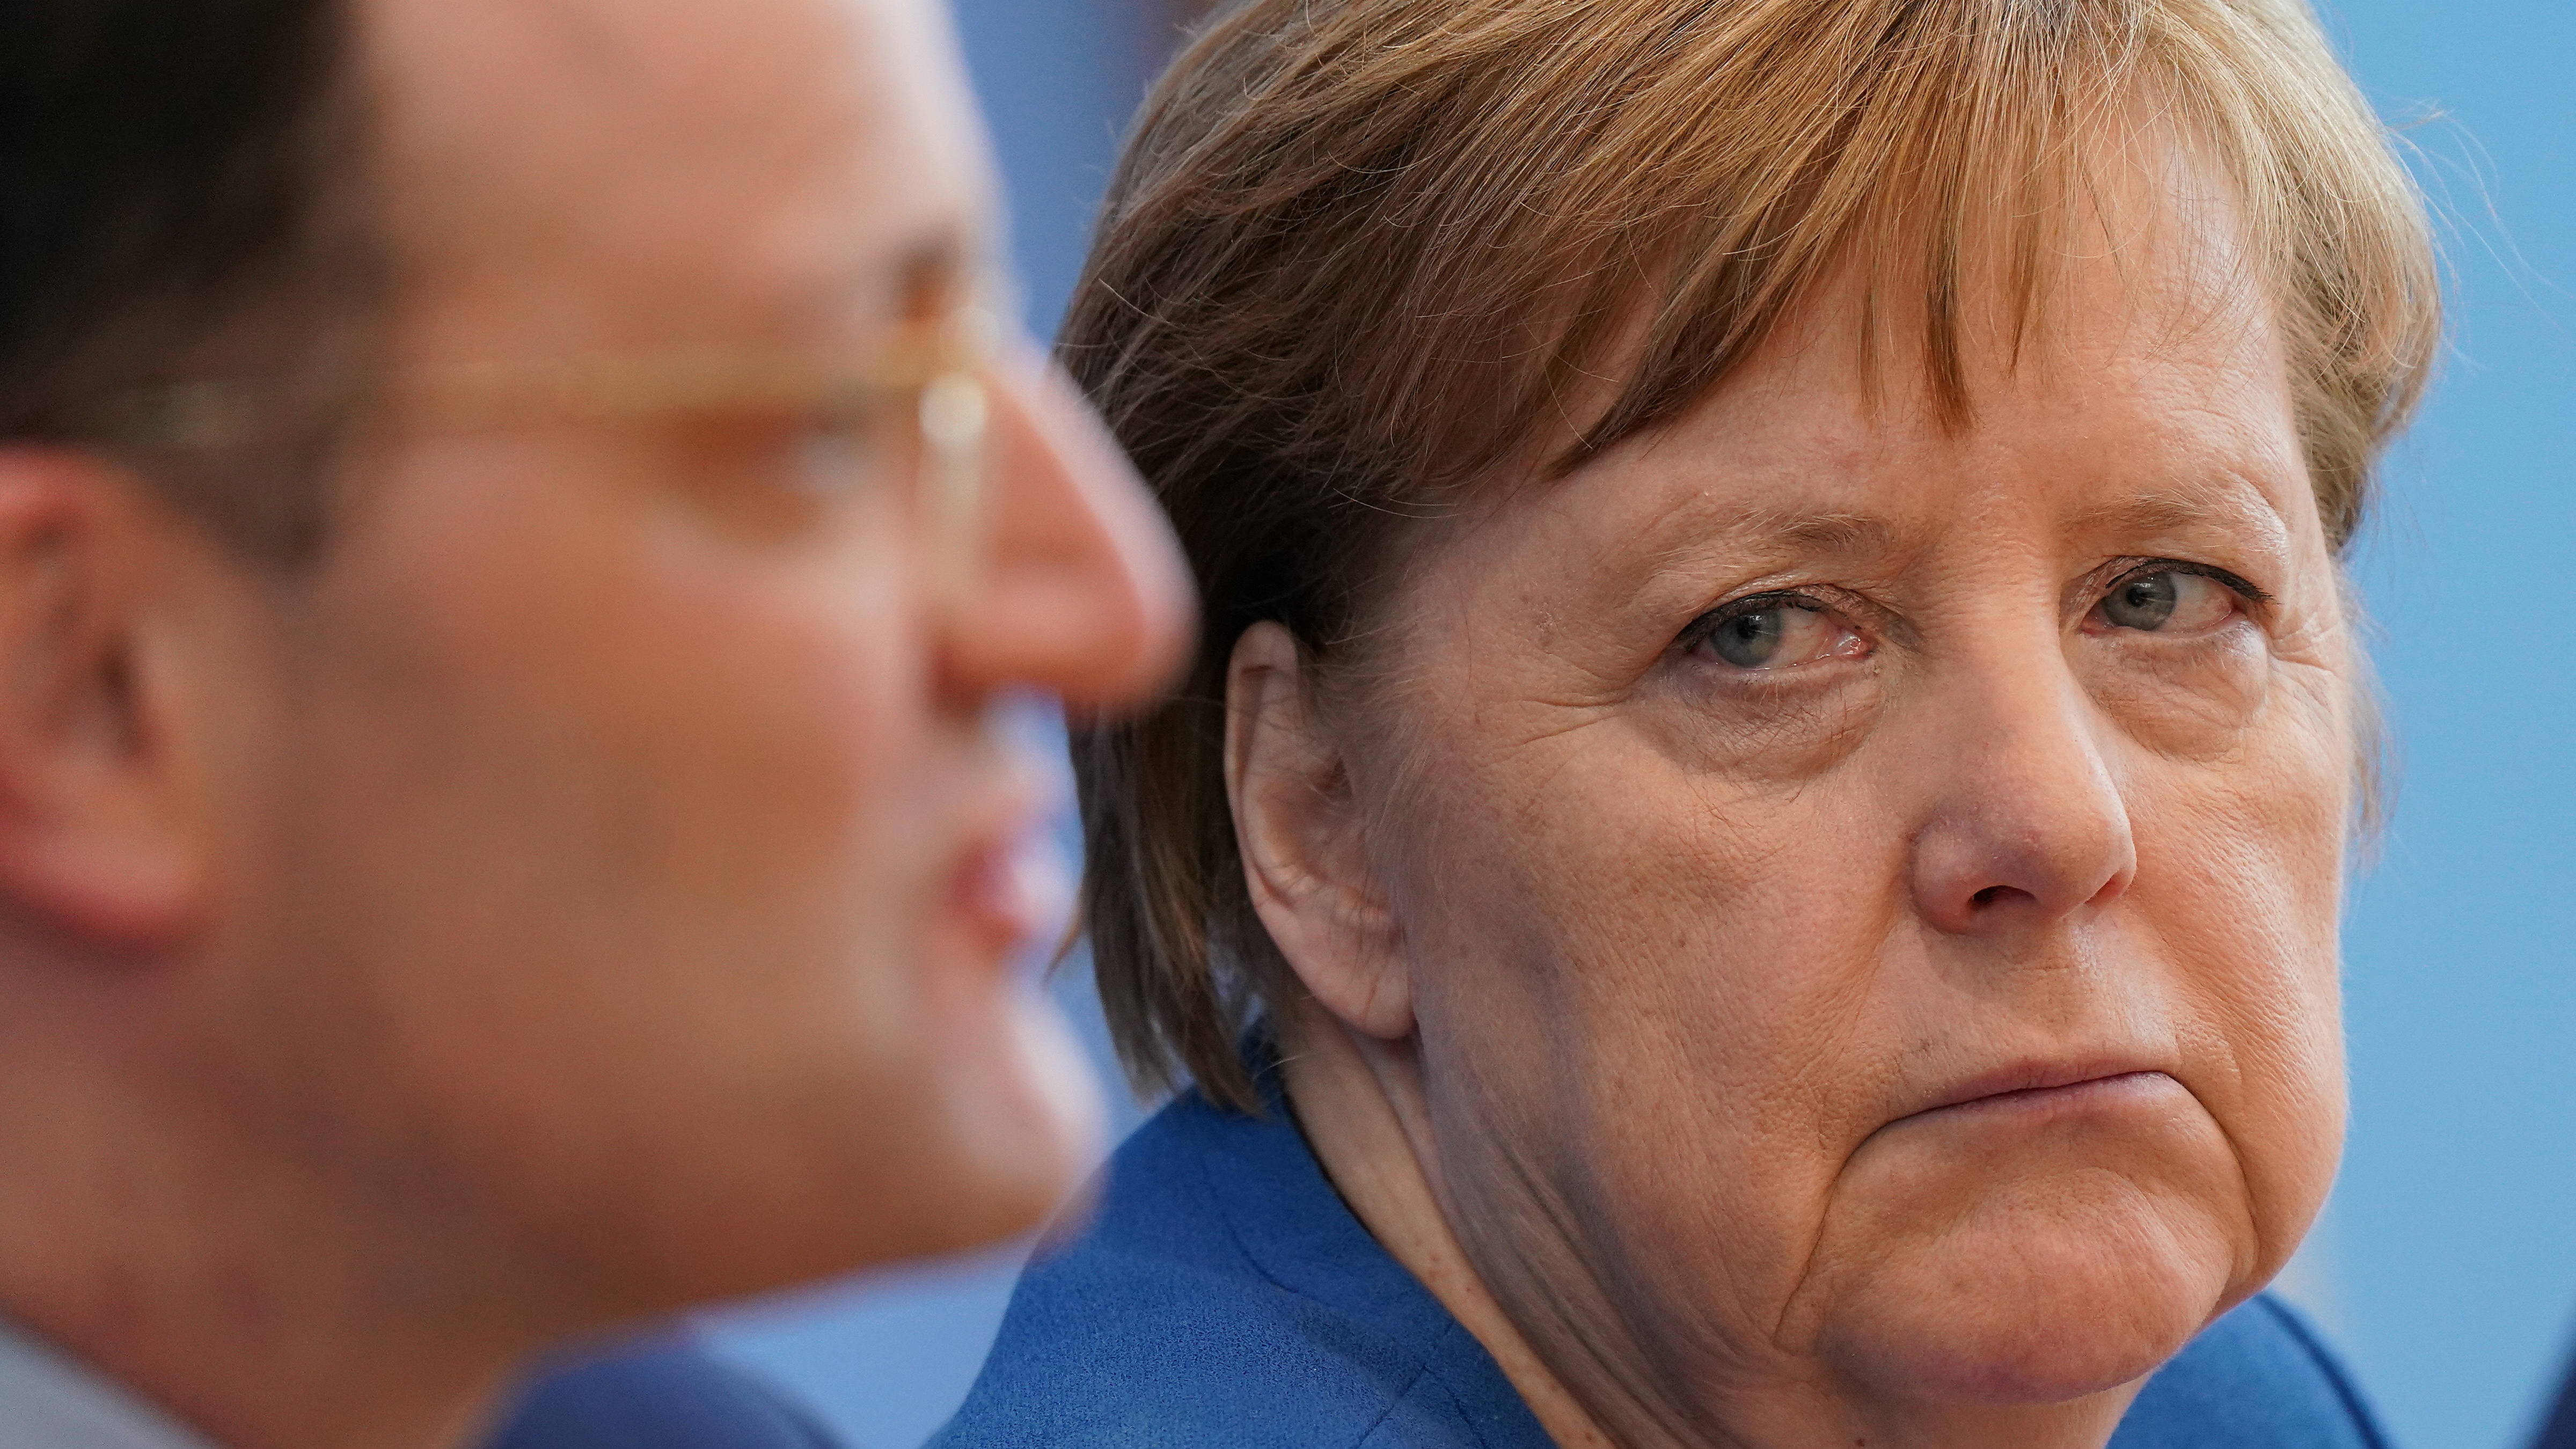 German Chancellor Angela Merkel alongside Health Minister Jens Spahn